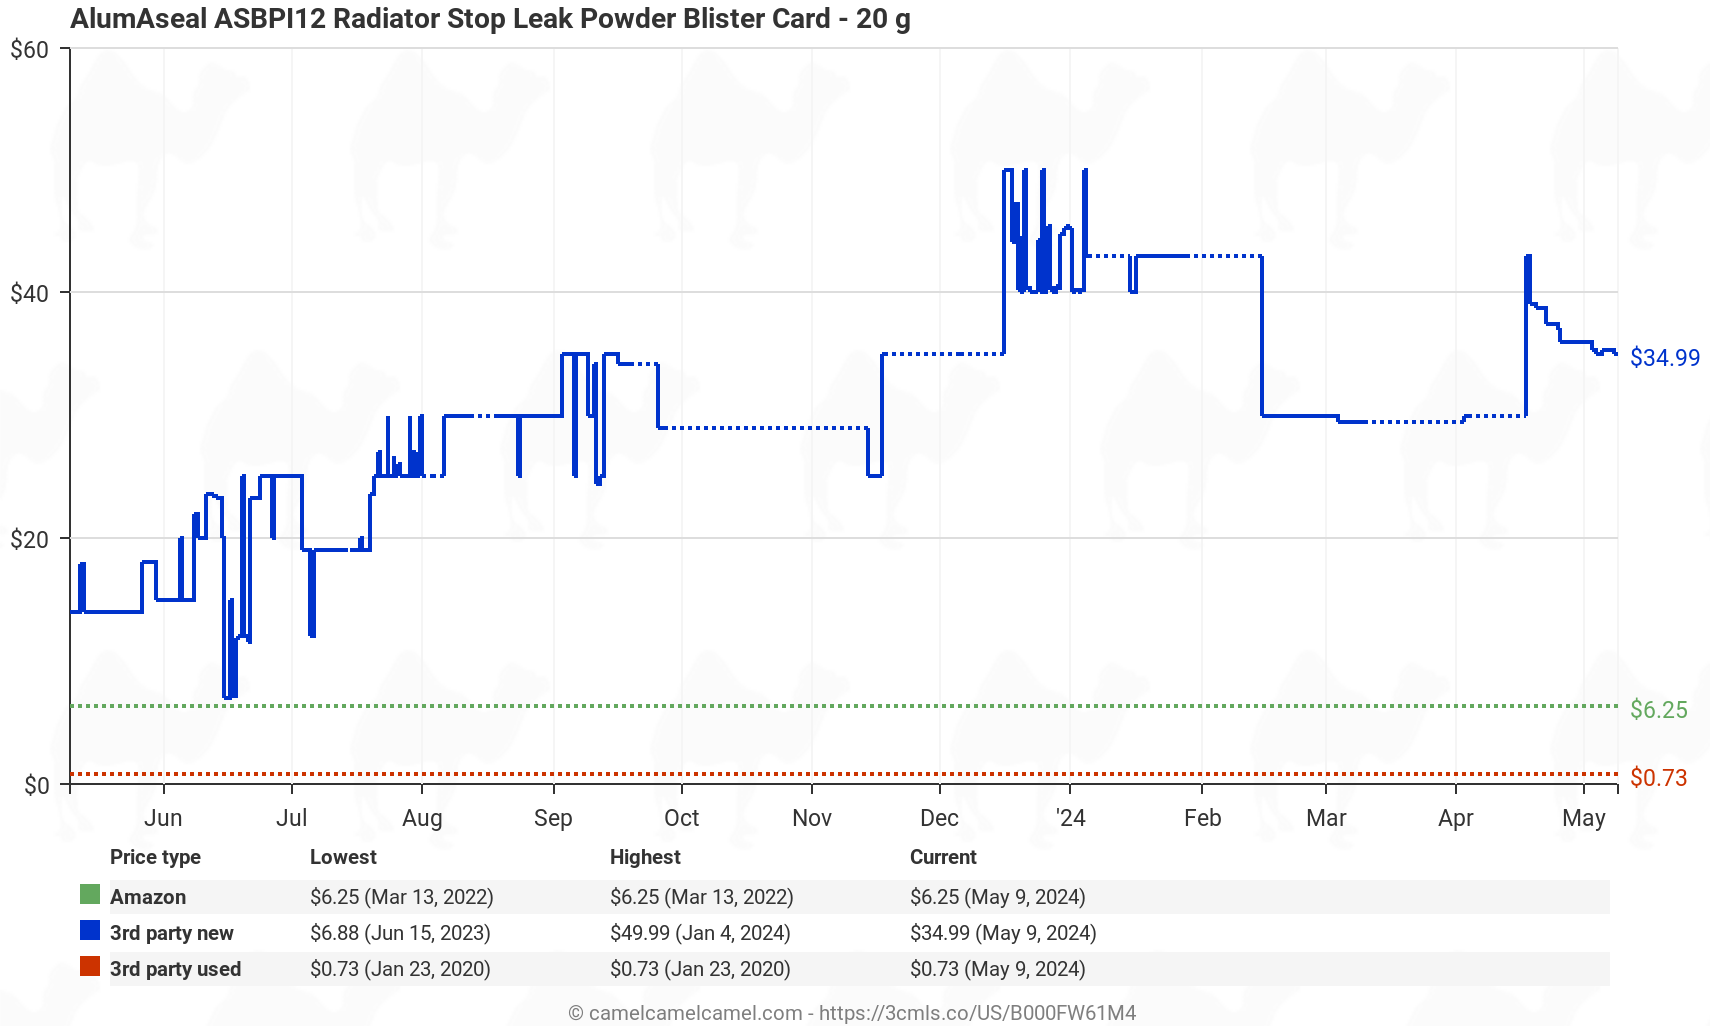 AlumAseal ASBPI12 Radiator Stop Leak Powder Blister Card - 20 g - Price History: B000FW61M4